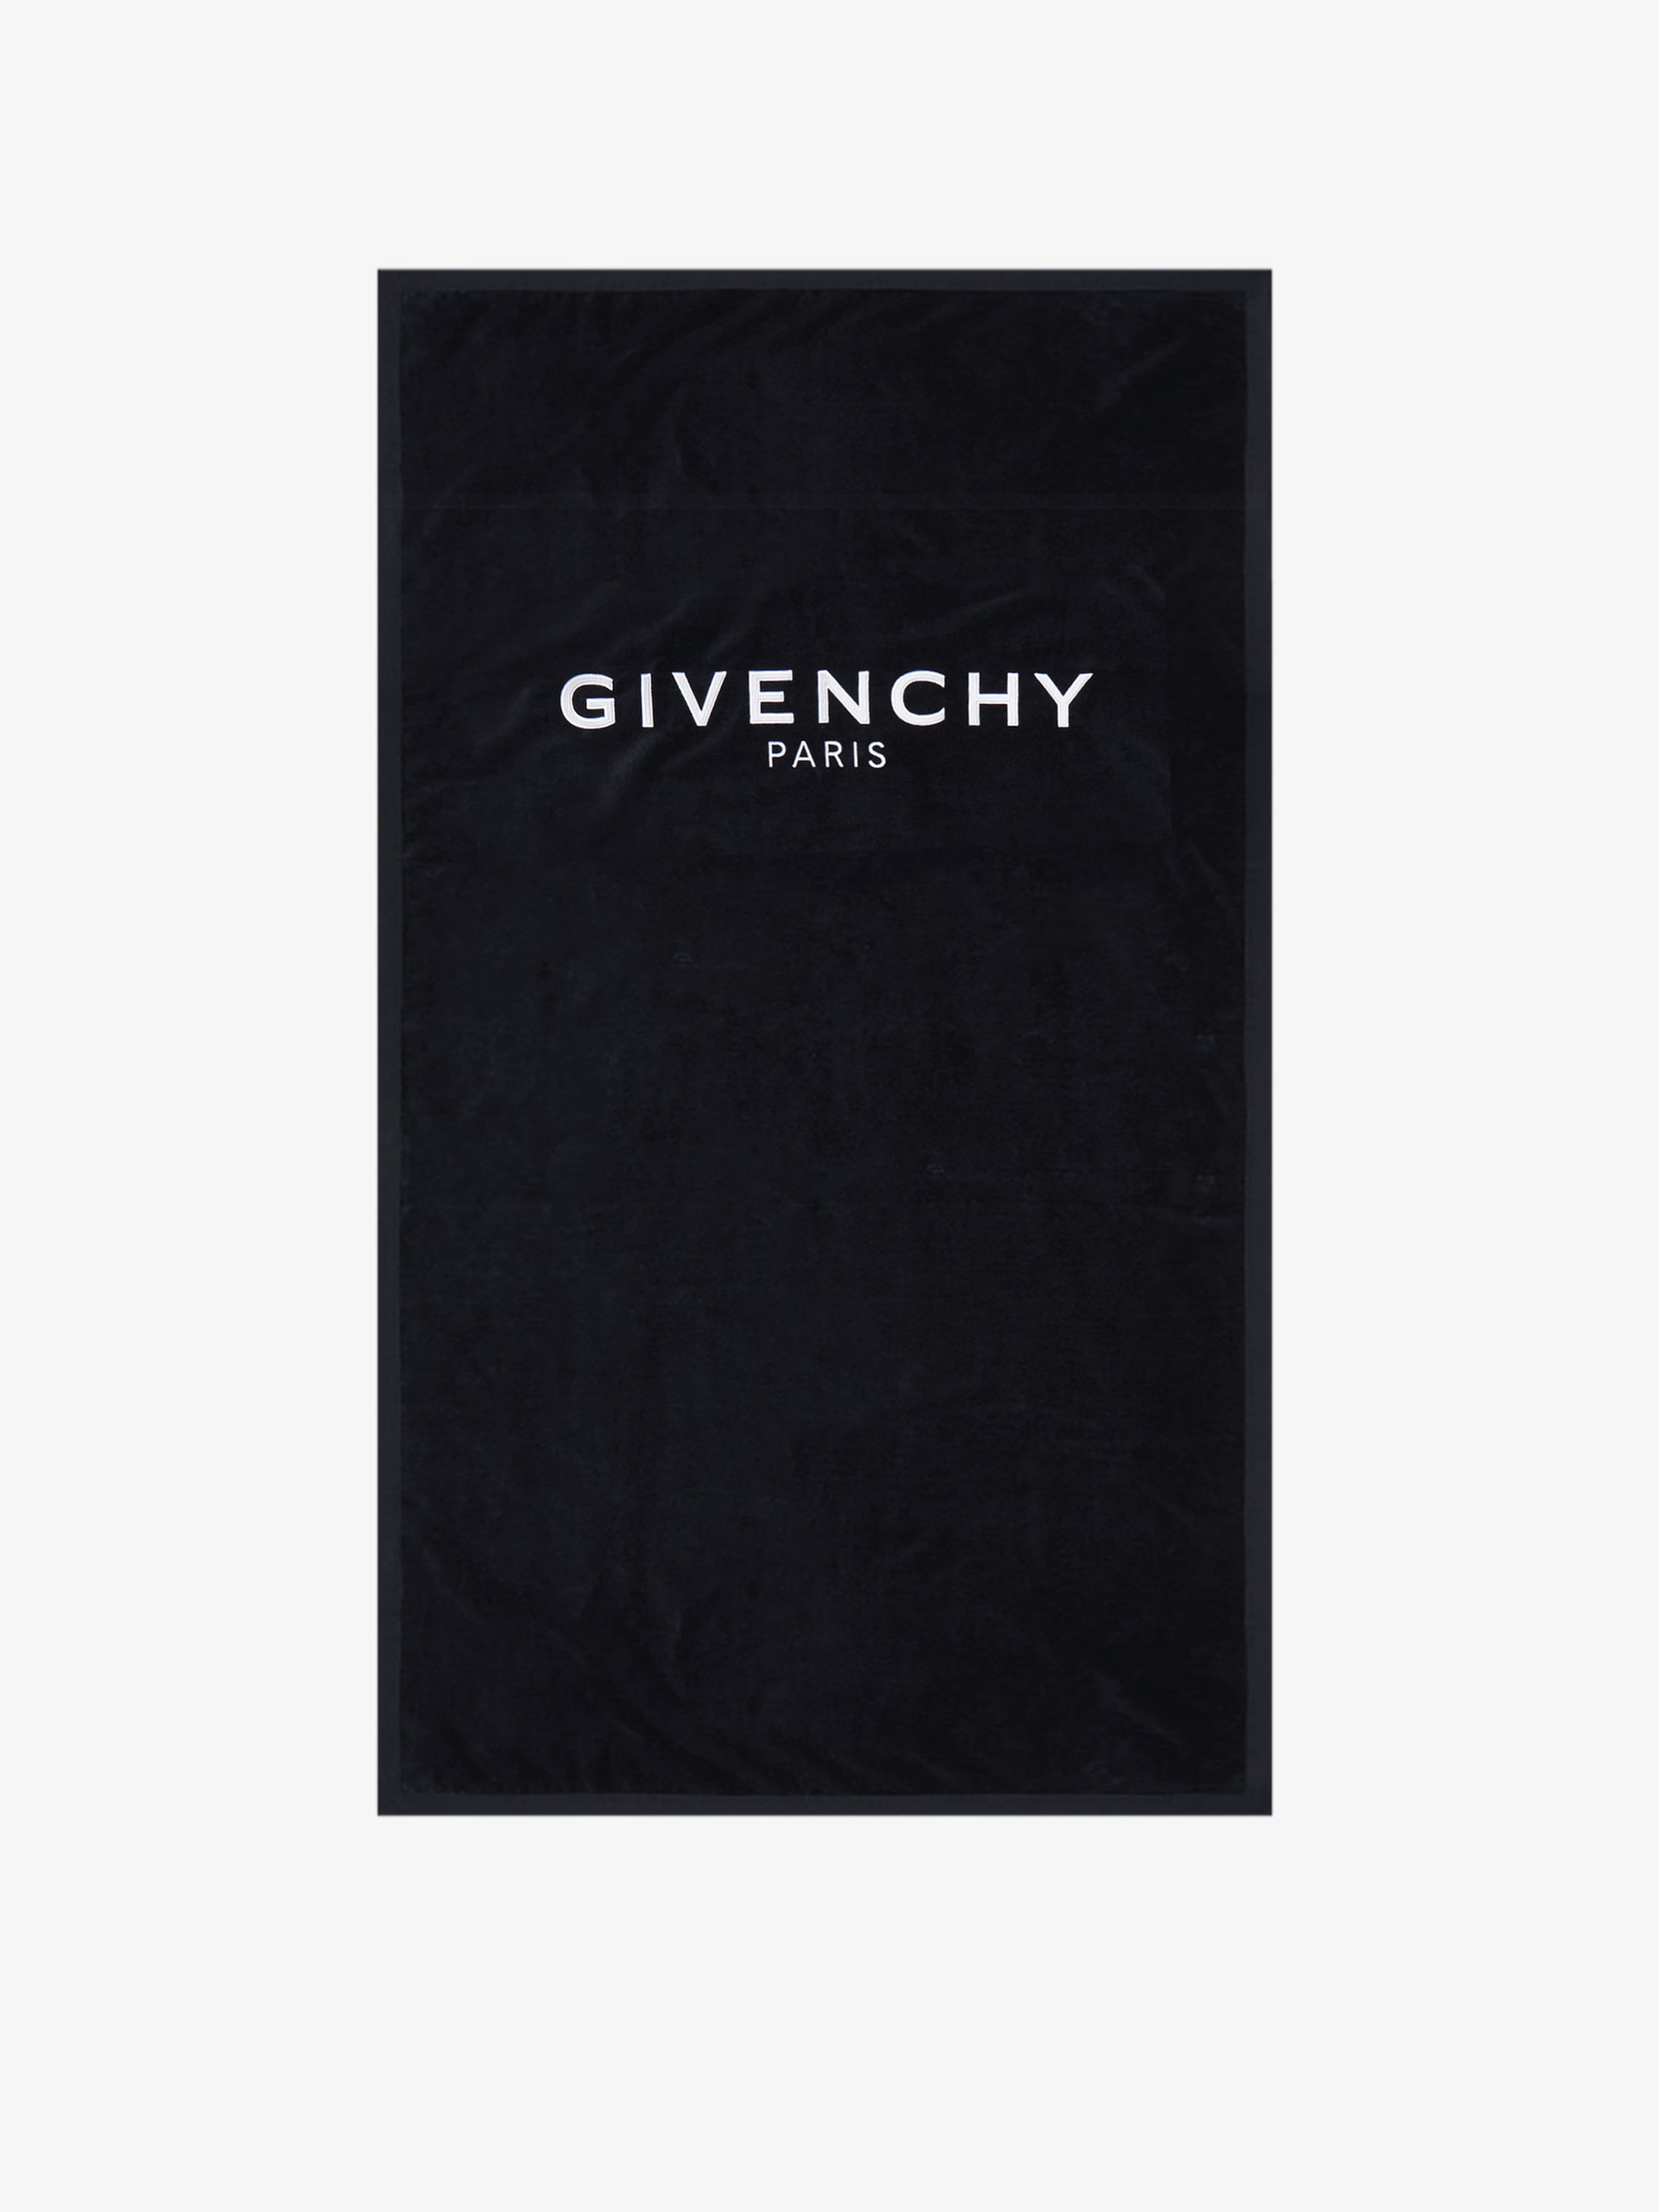 GIVENCHY PARIS beach towel | GIVENCHY Paris